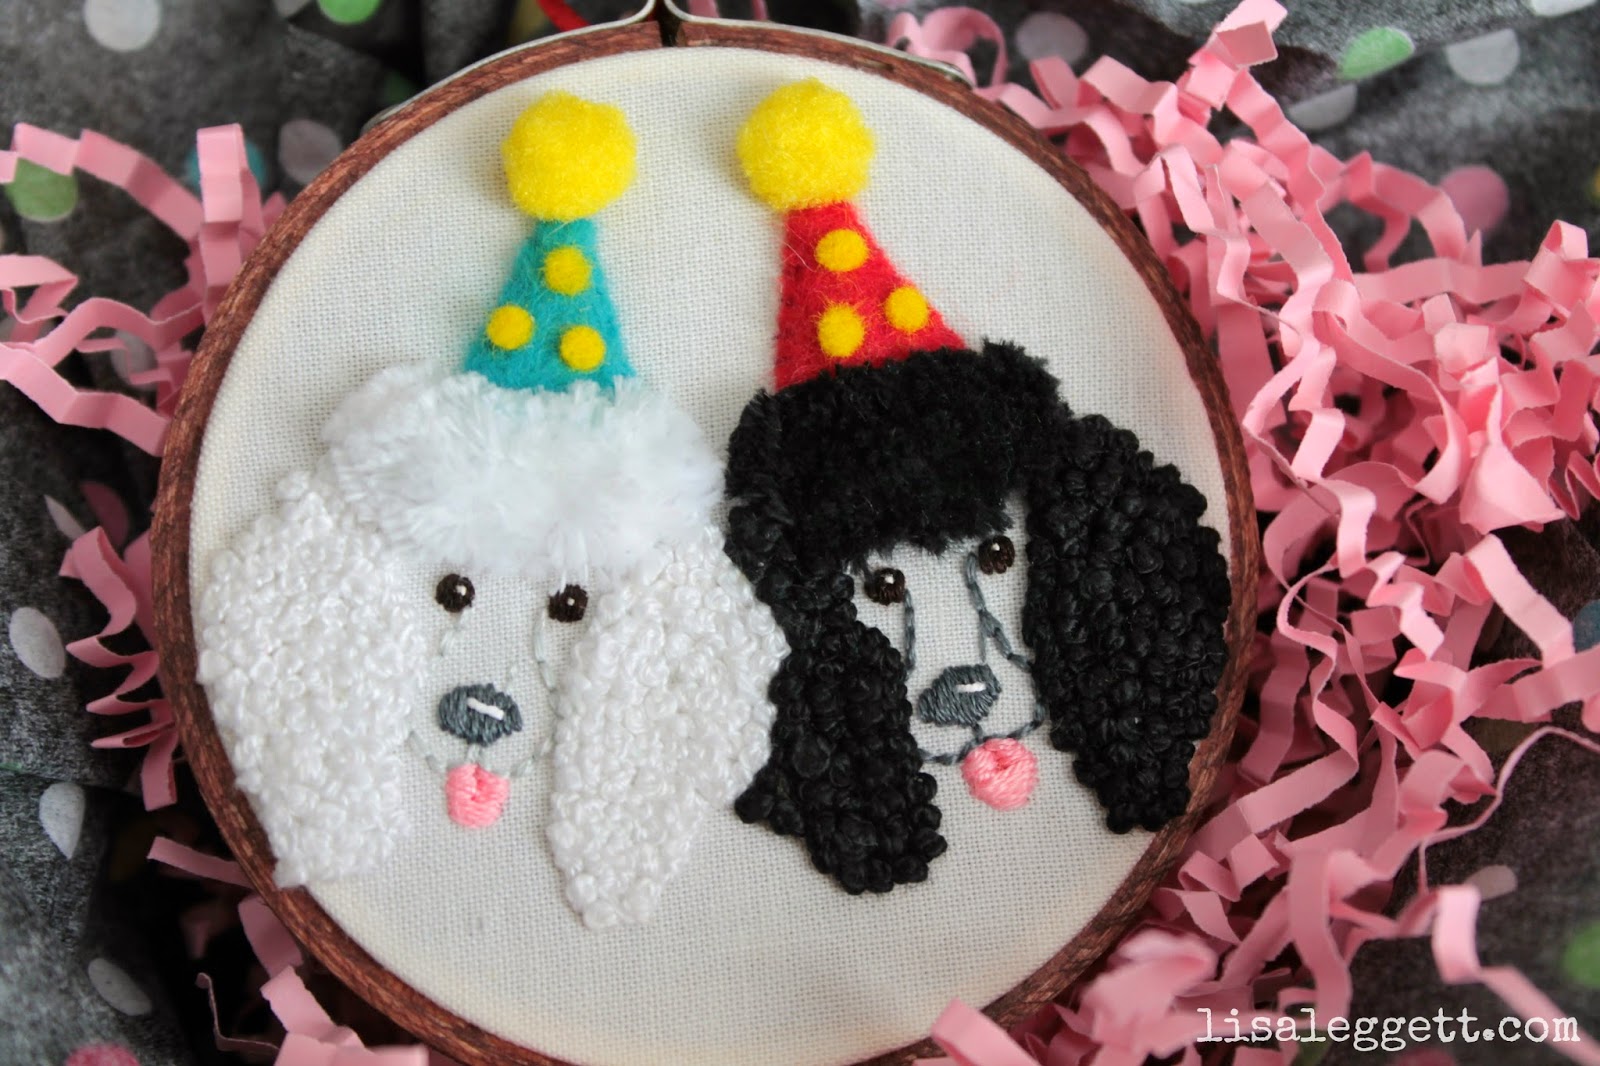 Party Poodles by Lisa Leggett